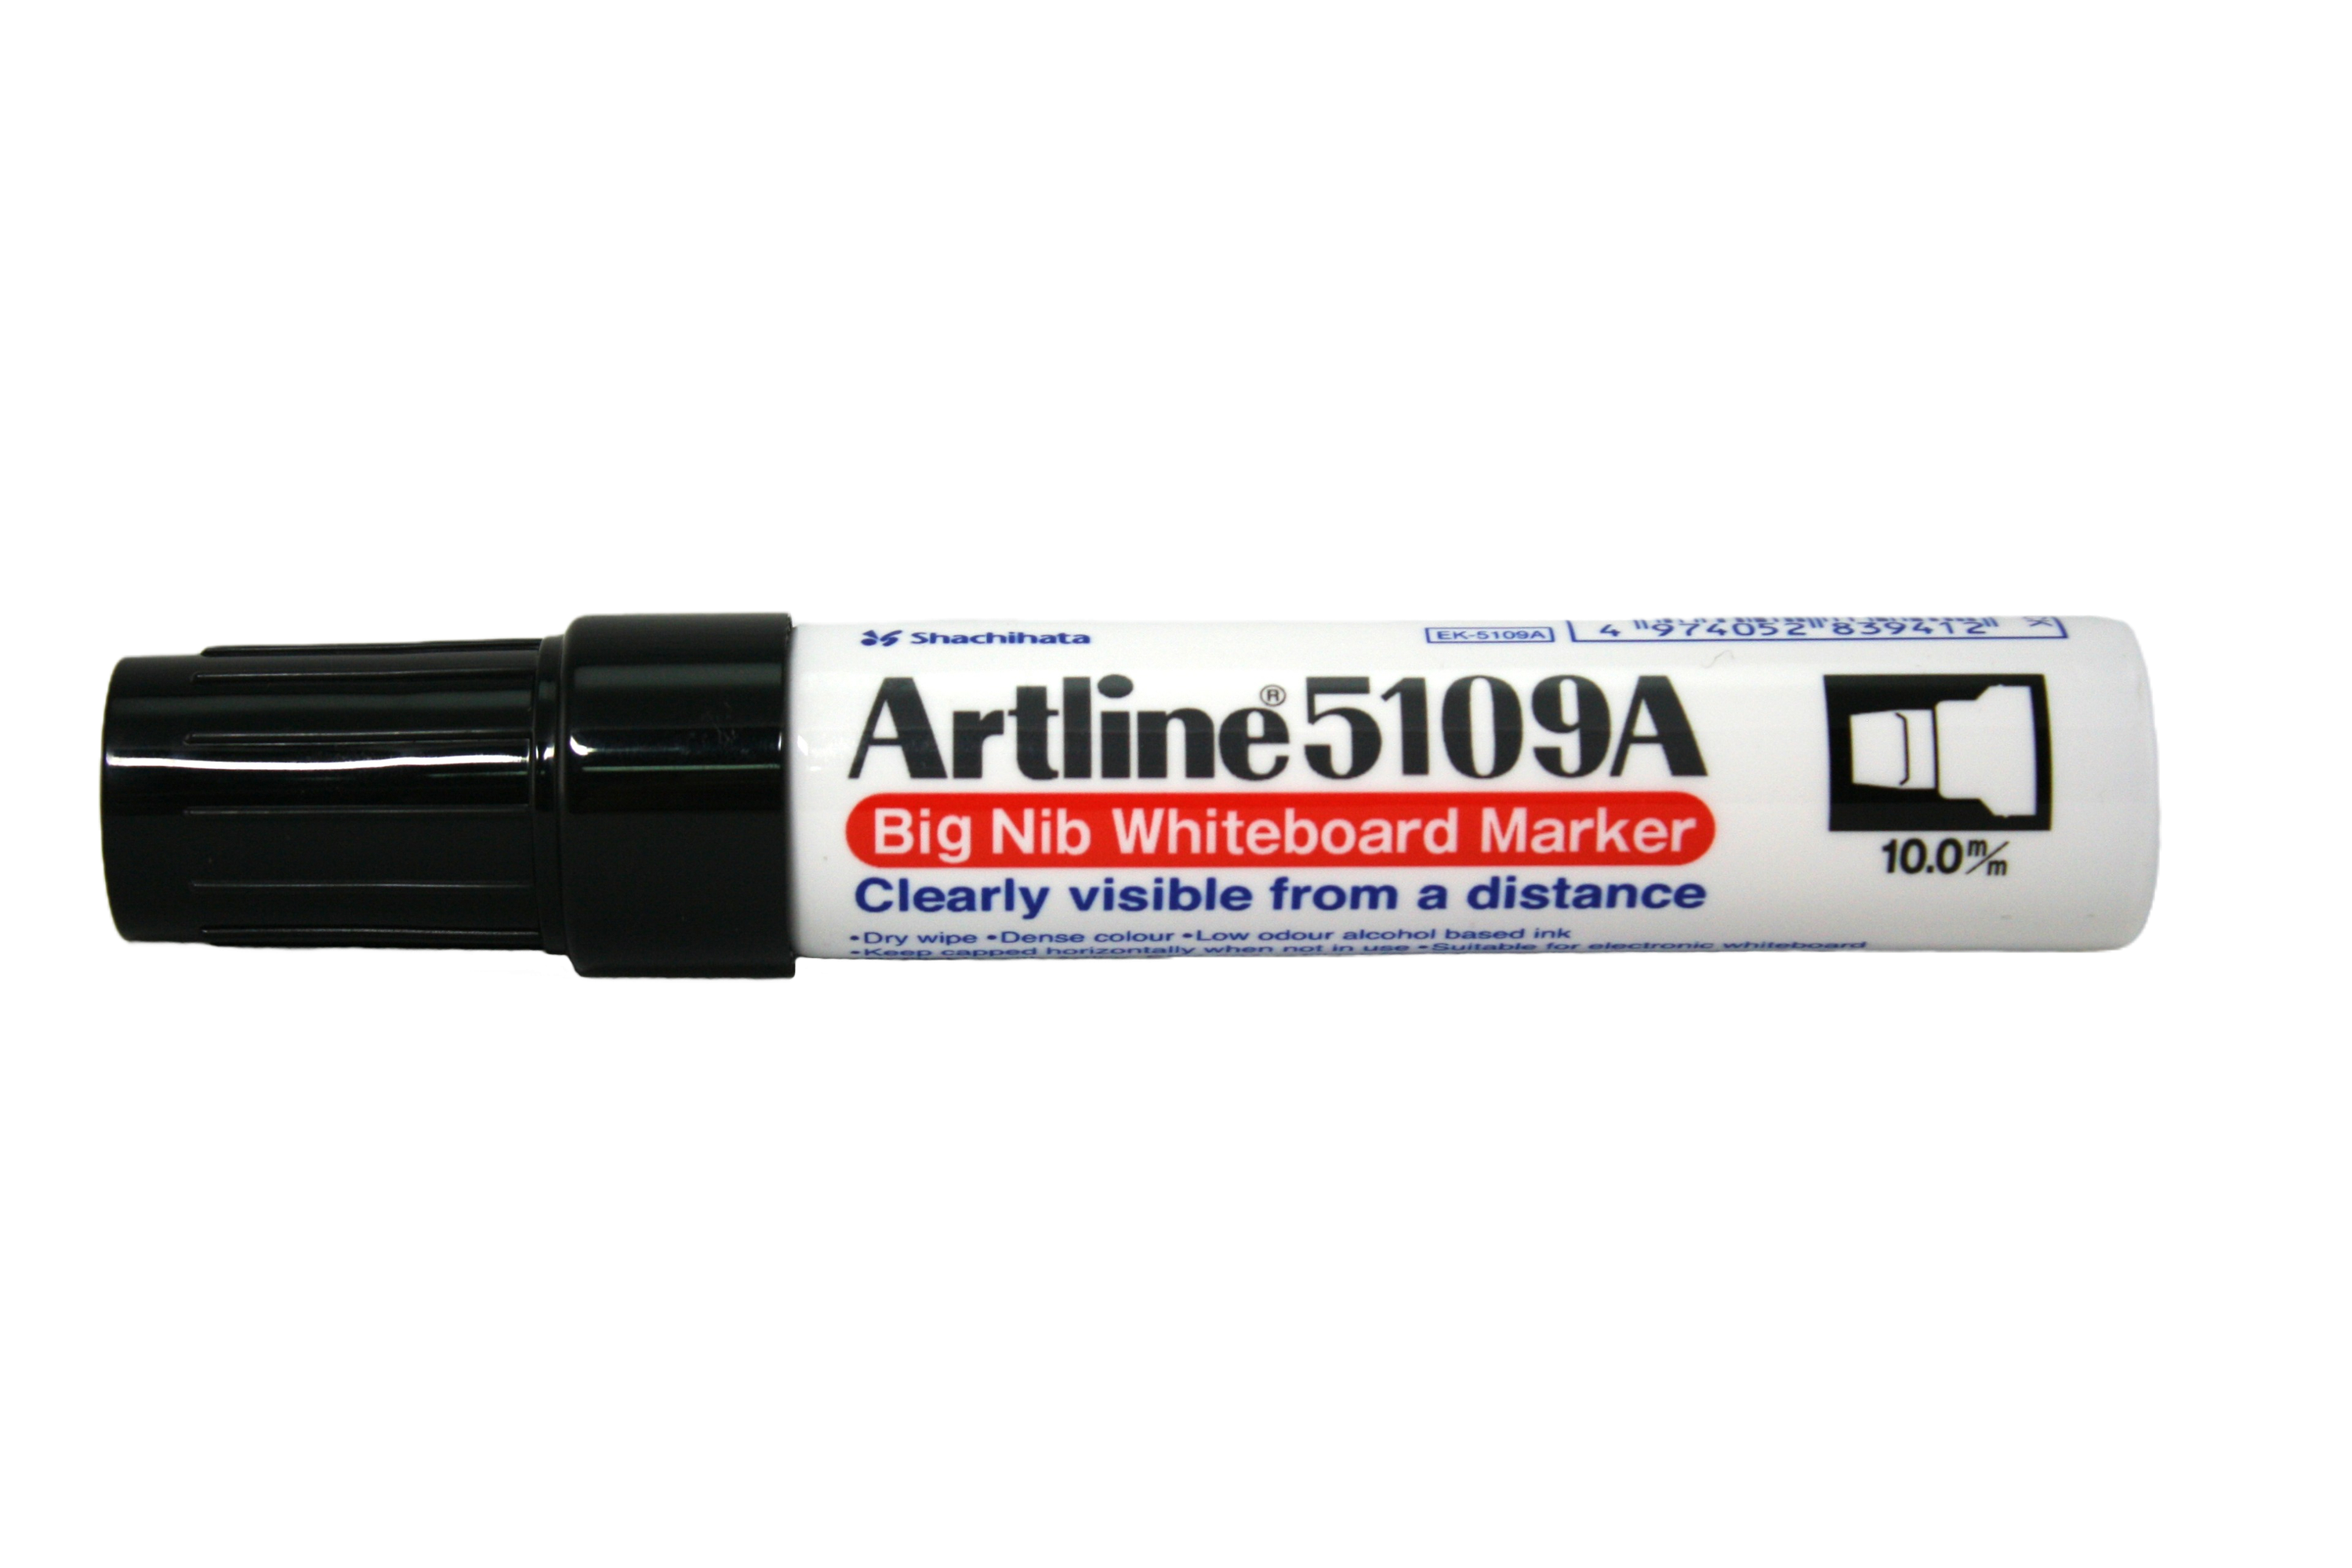 Artline 5109A Big Nib Whiteboard Marker, black, lid on